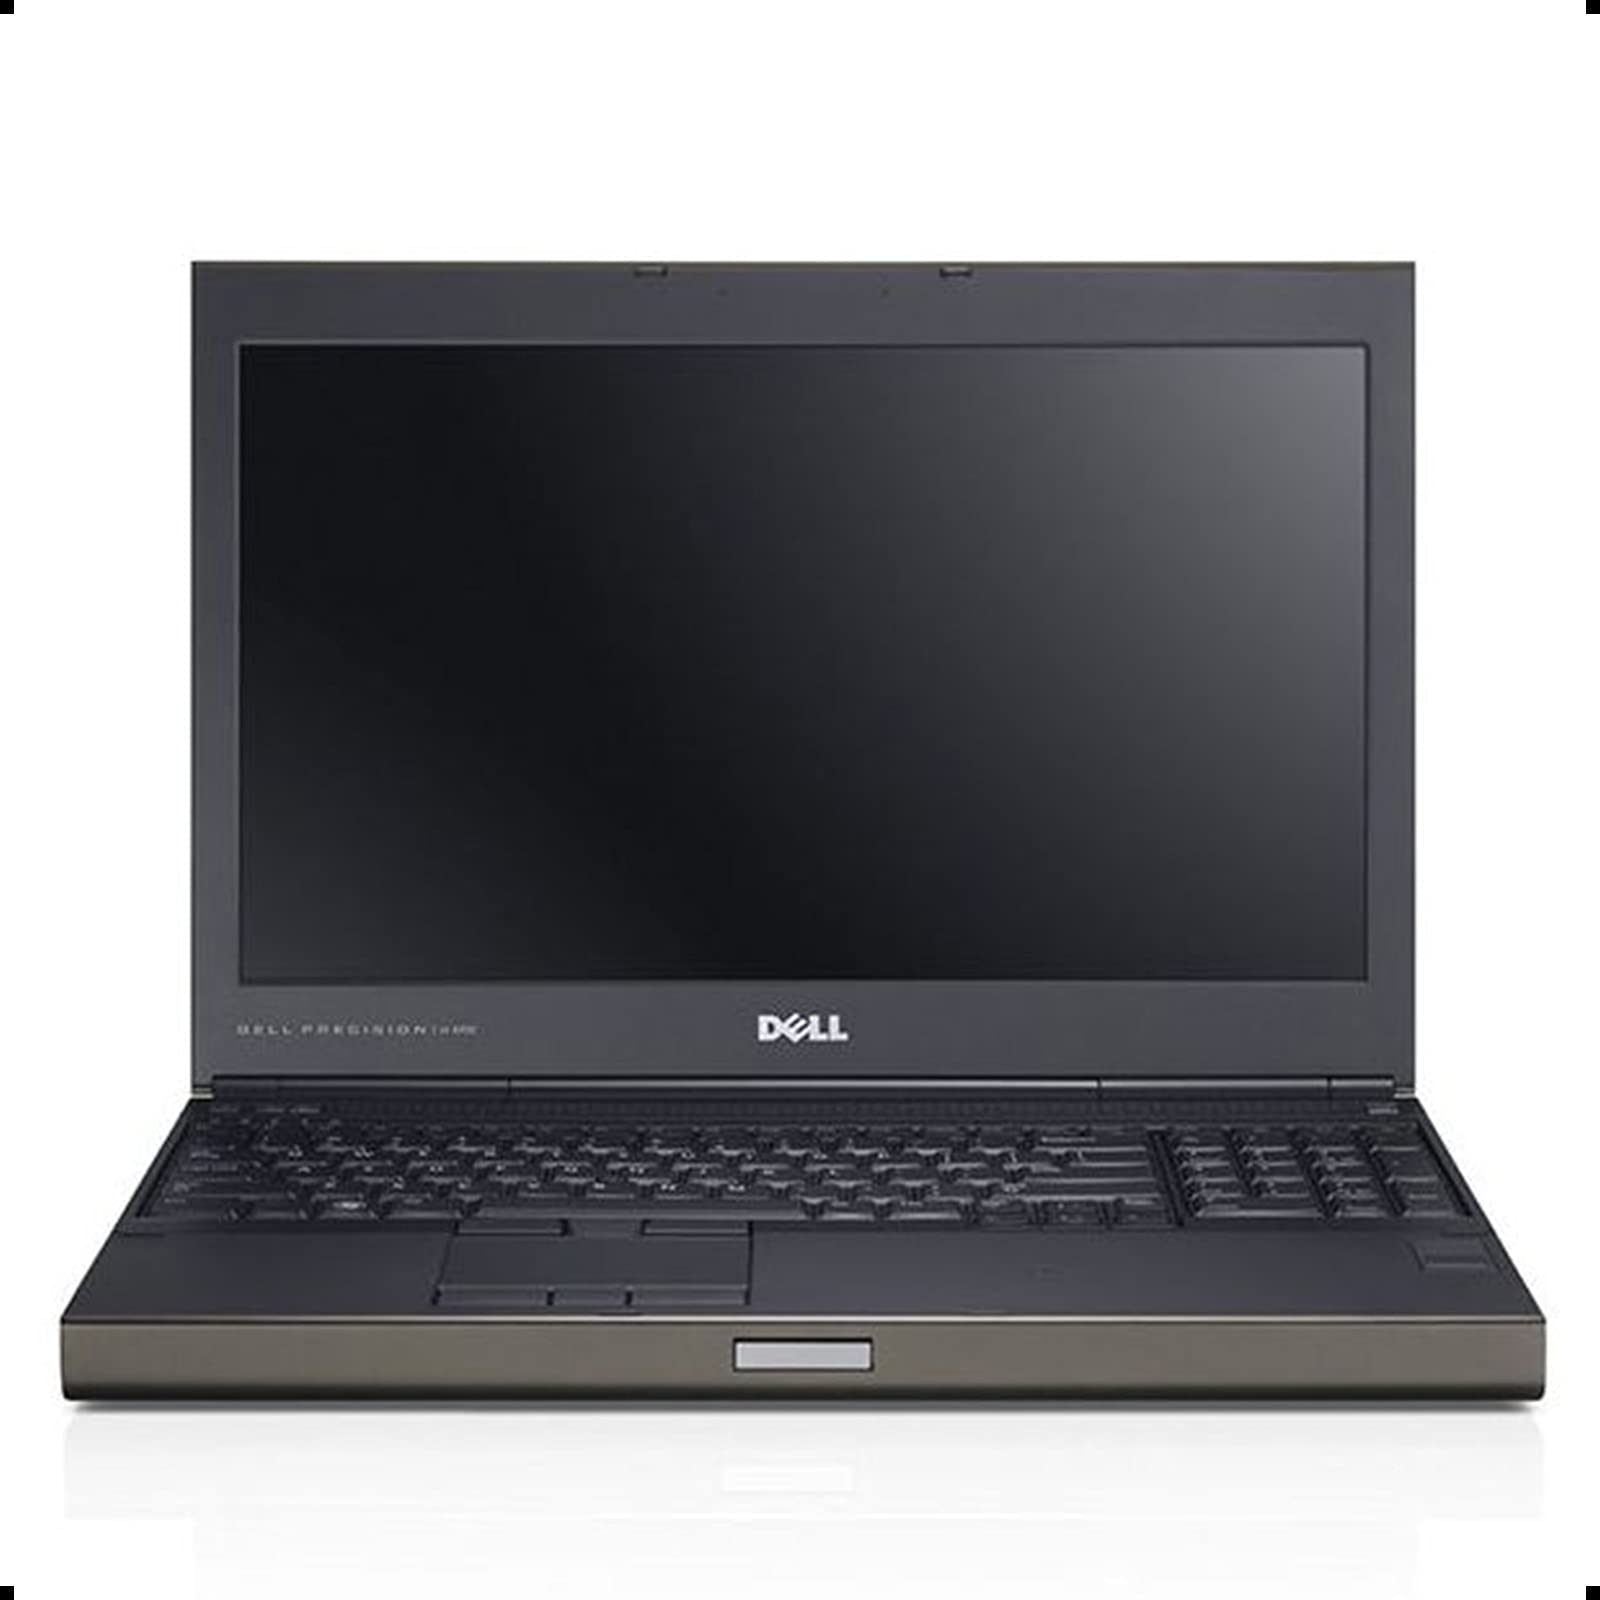 Mua Dell Precision M4700  Inch Workstation Laptop, Intel Quad Core i7  3720QM up to , 16G DDR3, 512G SSD, 1G DDR5 Video Card, WiFi, DVD,  VGA, HDMI, Win 10 64 Bit